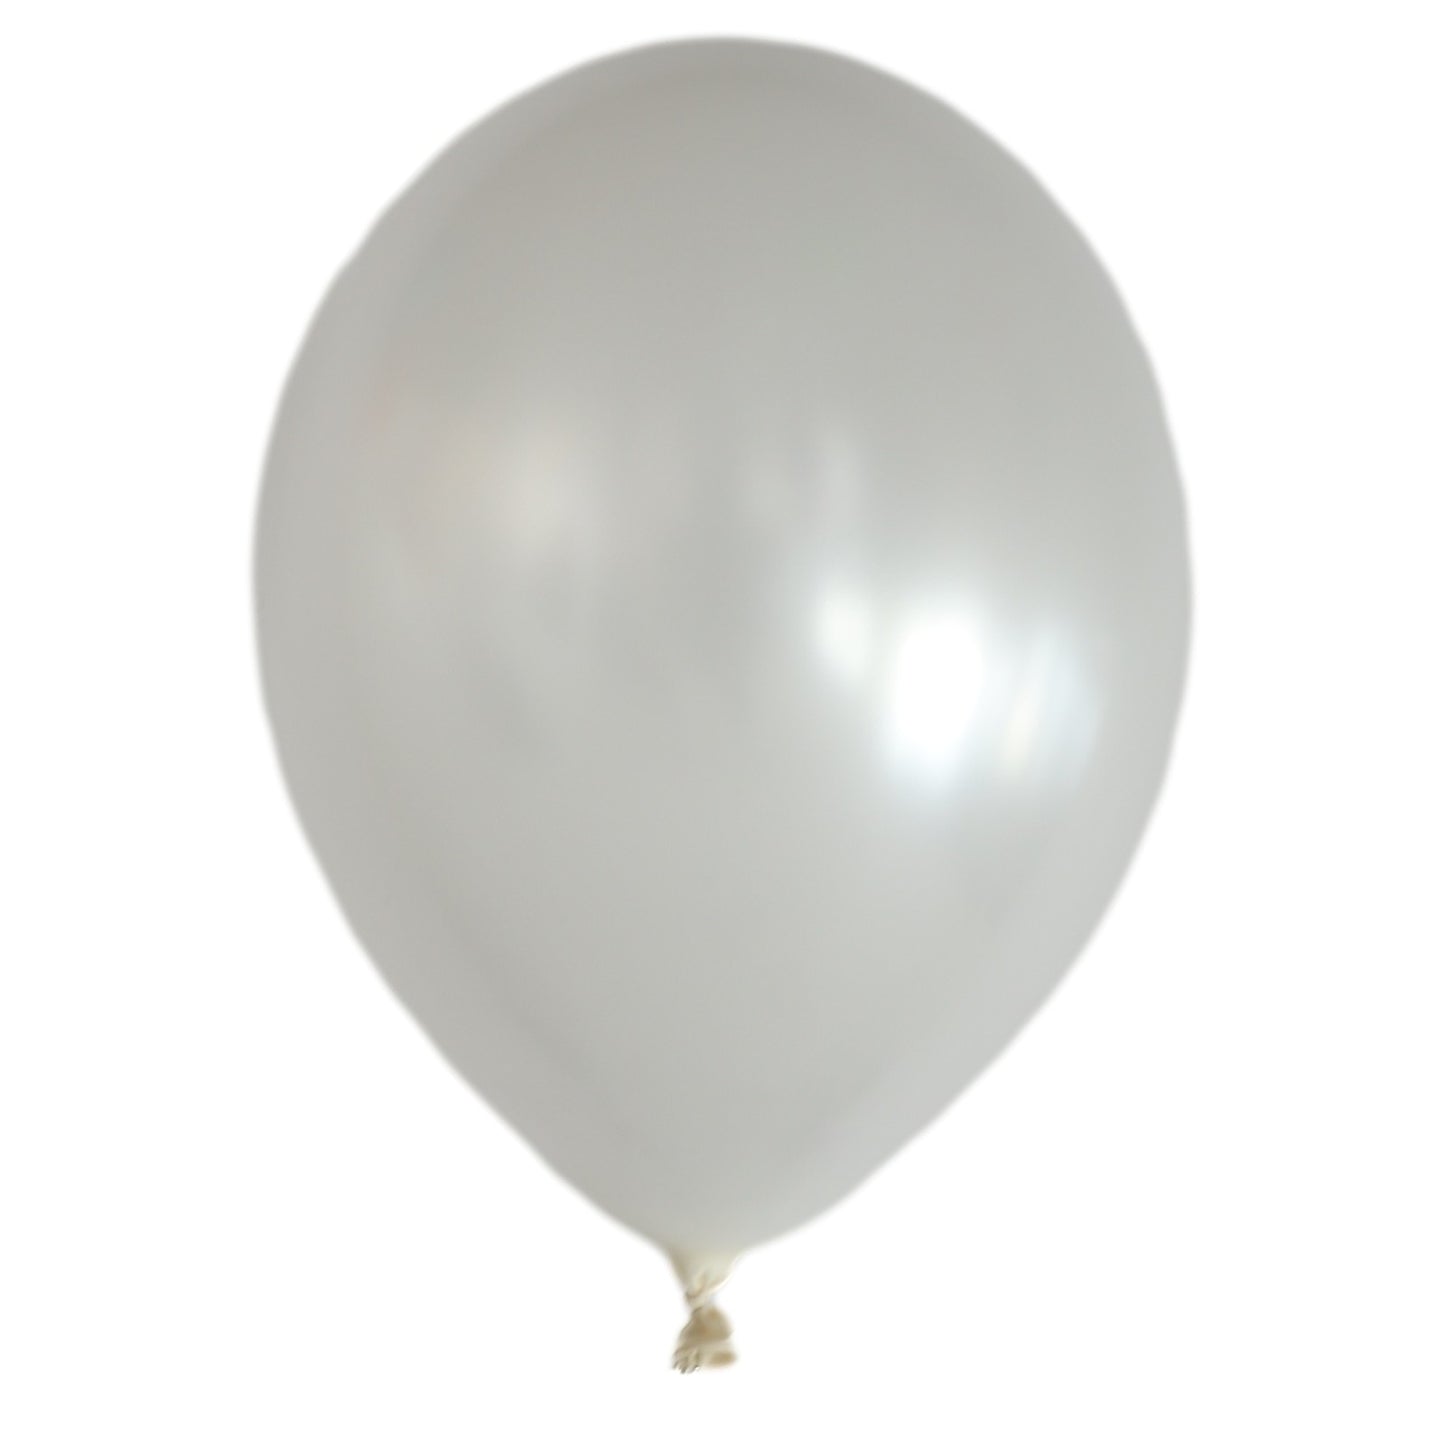 Wit (Pearl) Ballonnen (10 stuks / 30 CM)